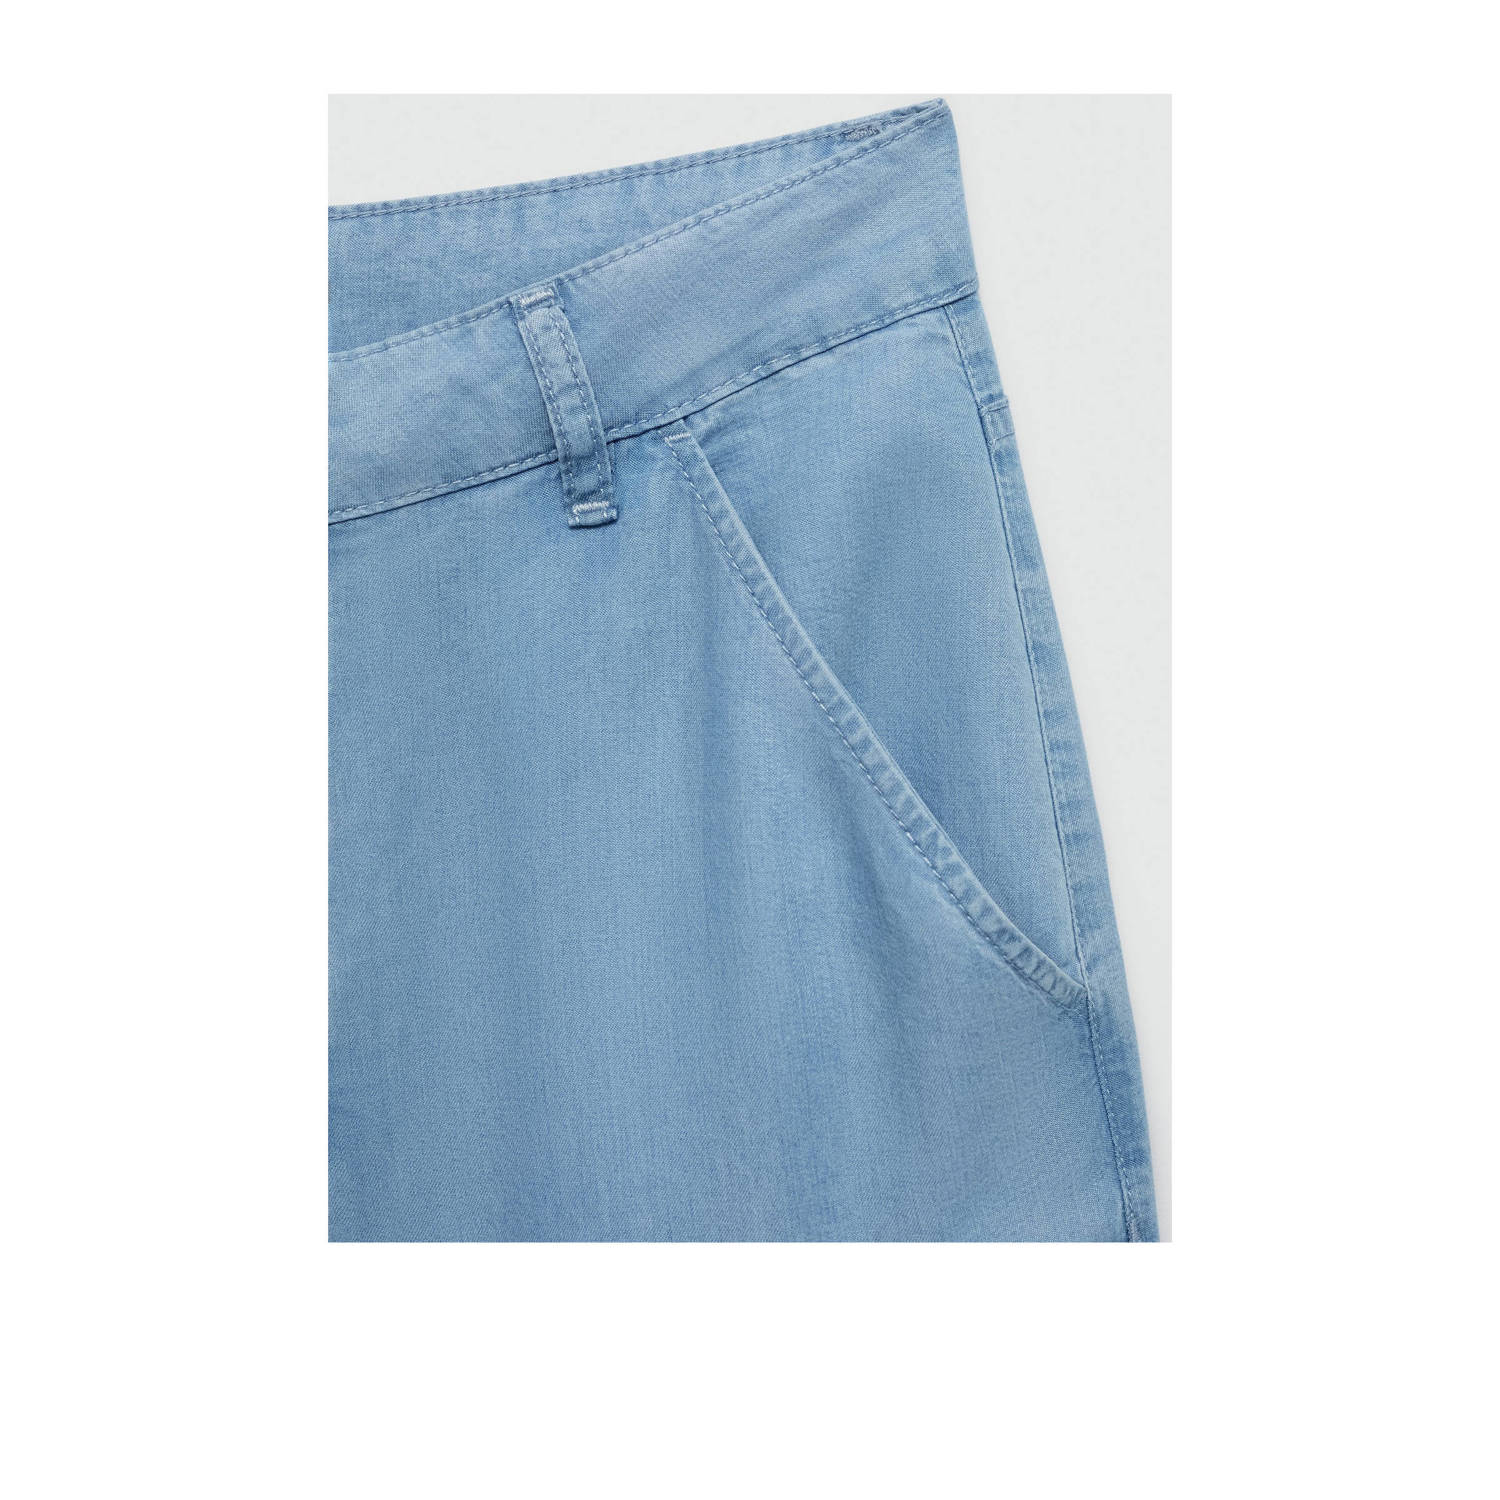 Mango wide leg pantalon light blue denim